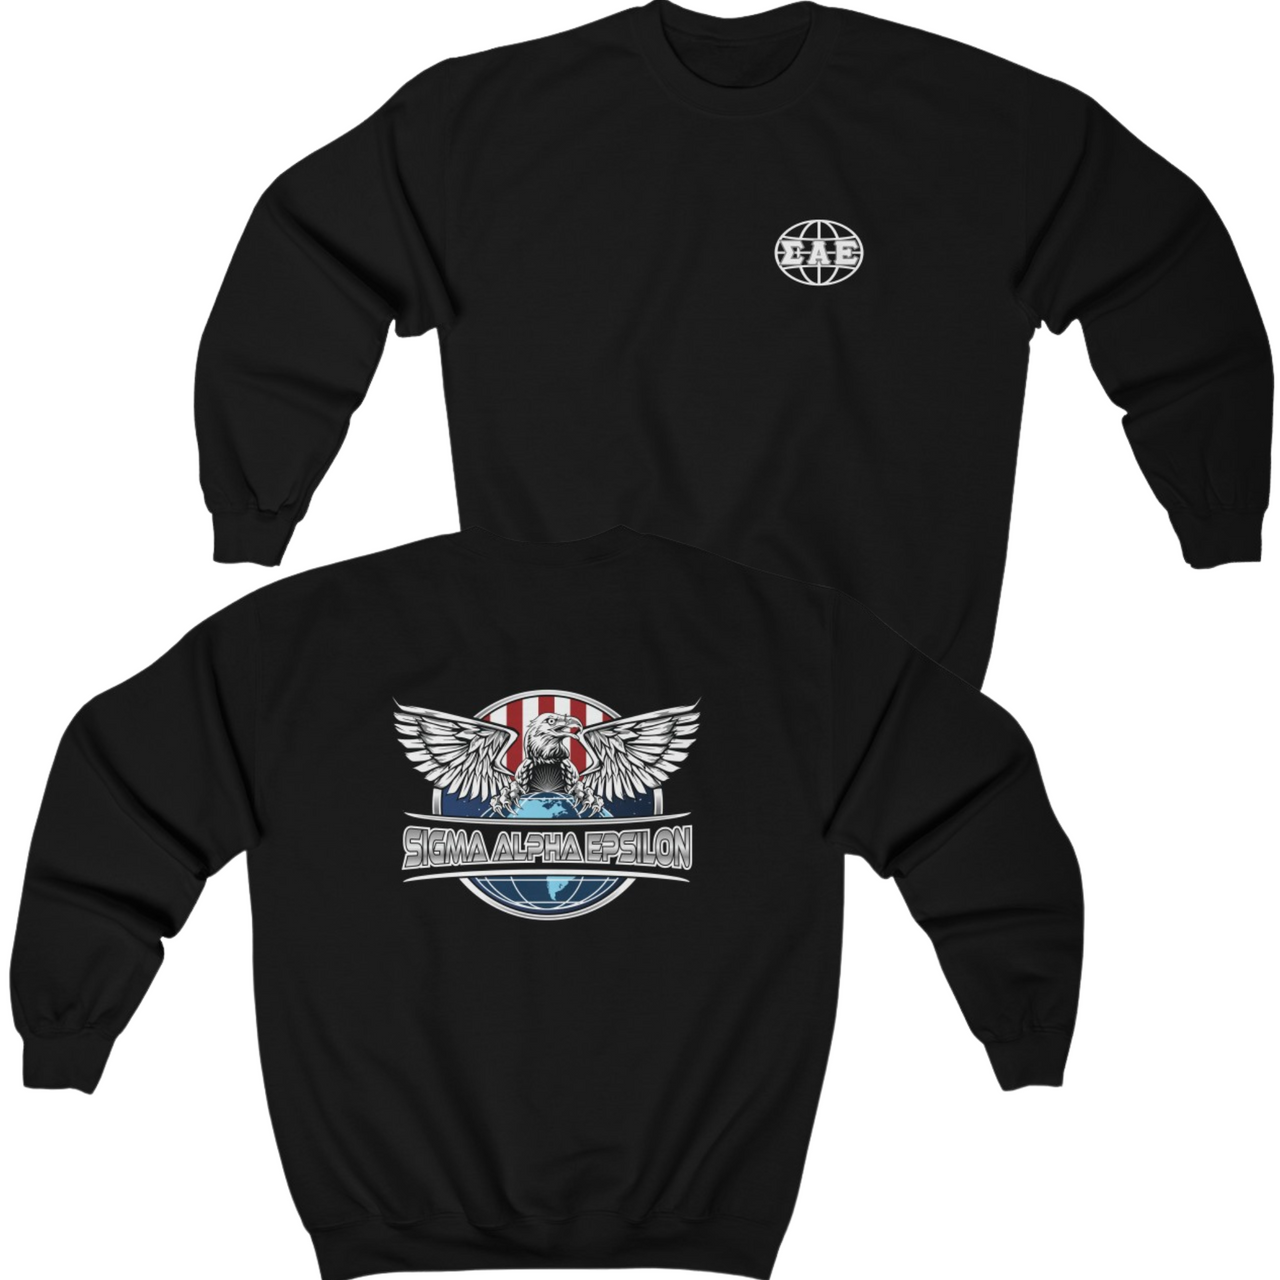 Black Sigma Alpha Epsilon Graphic Crewneck Sweatshirt | The Fraternal Order | Sigma Alpha Epsilon Clothing and Merchandise